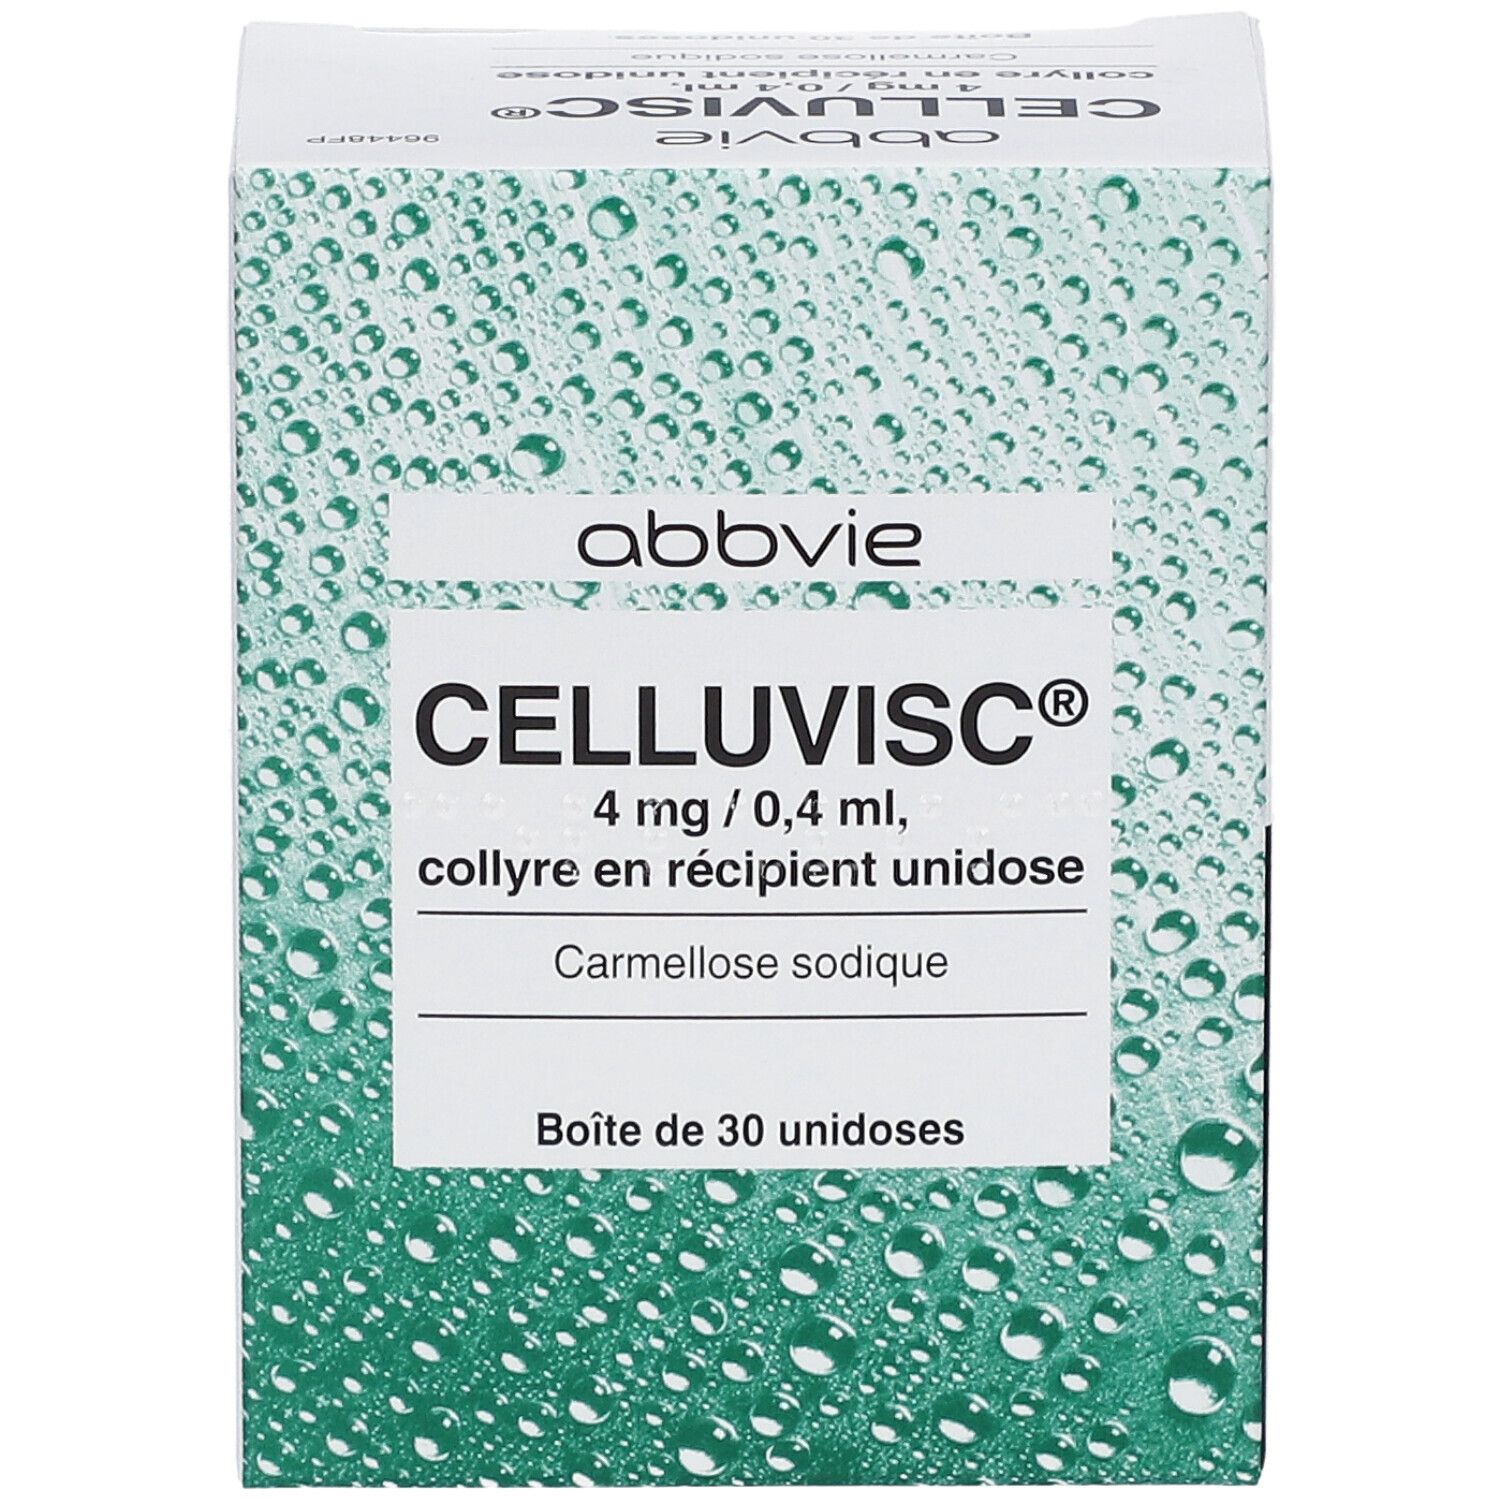 Allergan Celluvisc® 4 mg/0,4 mL